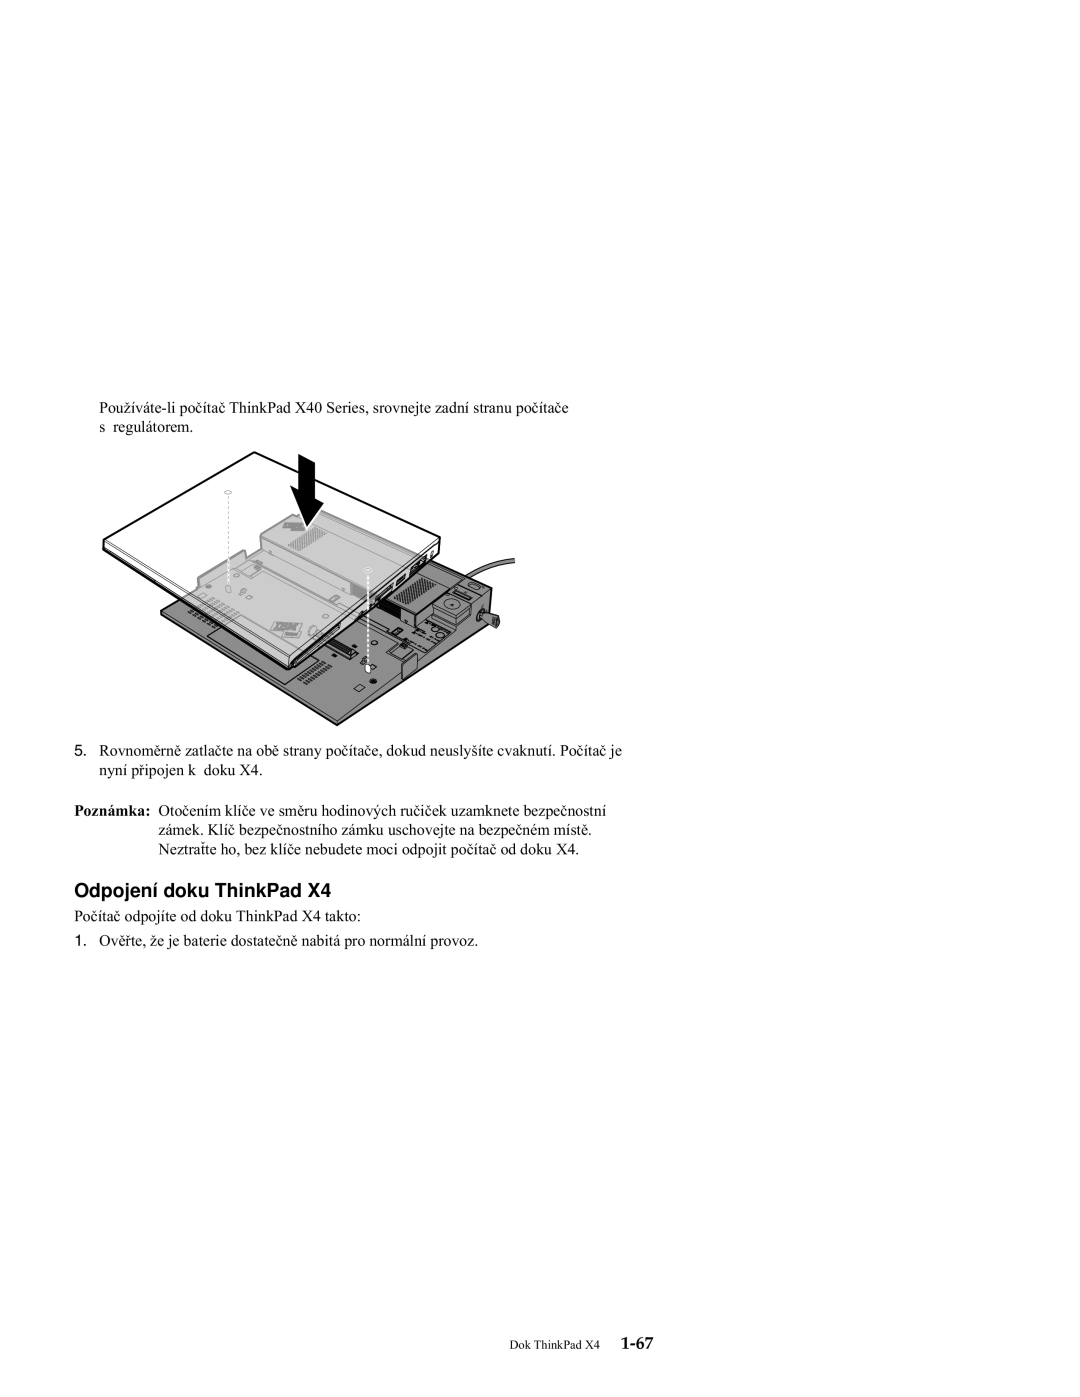 IBM X4 manual Odpojení doku ThinkPad 